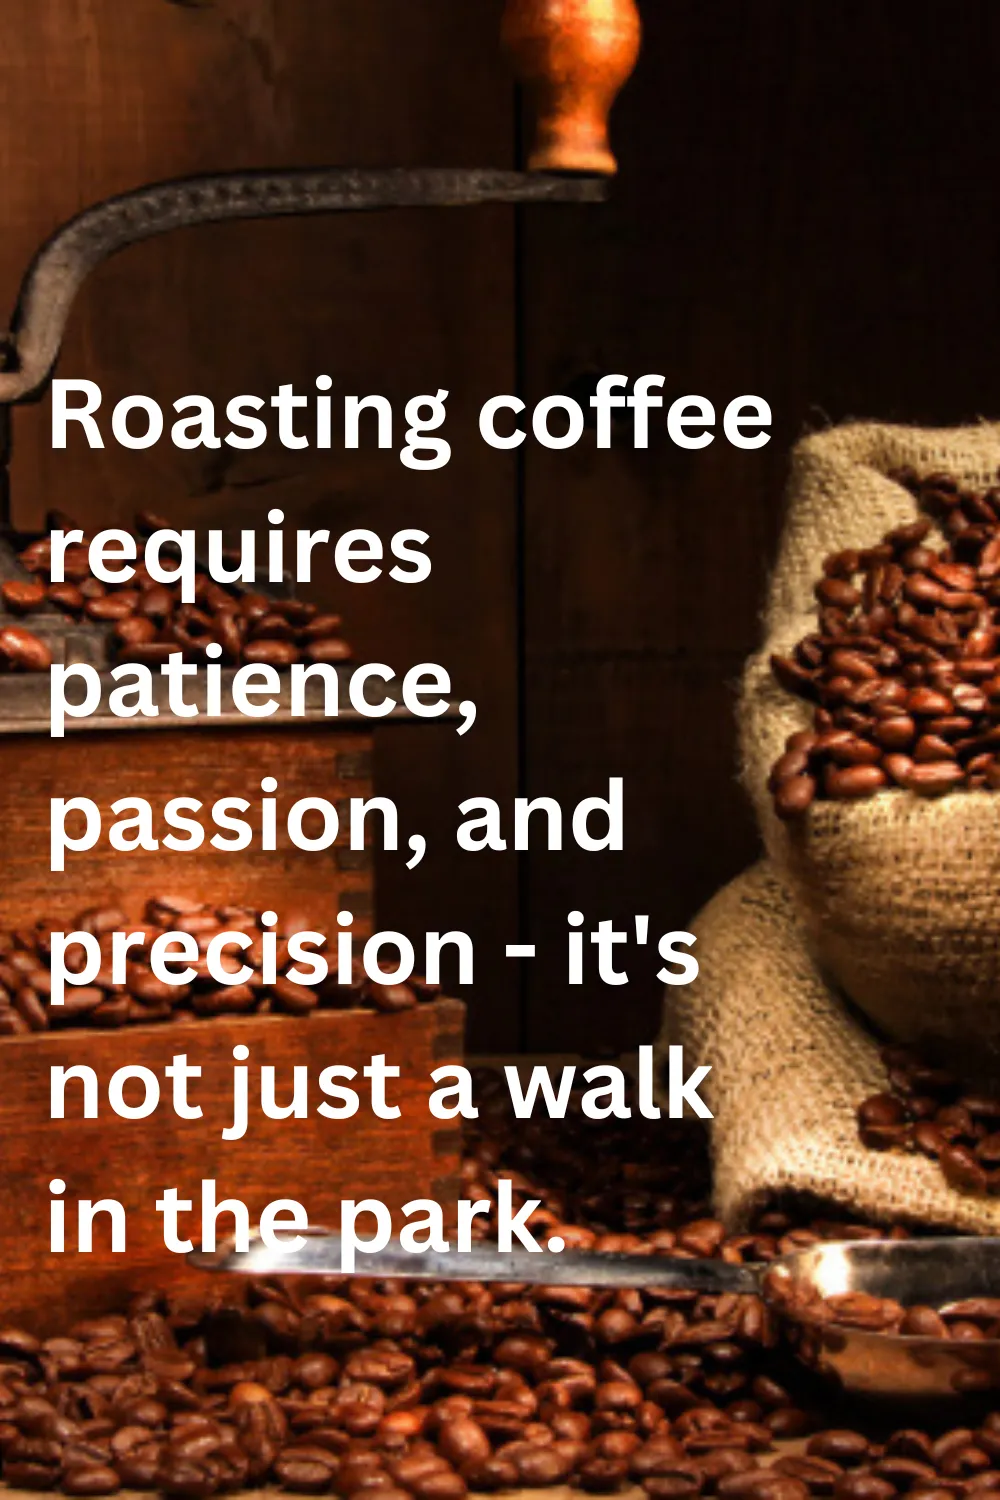 Coffee Roasting: Best Practices